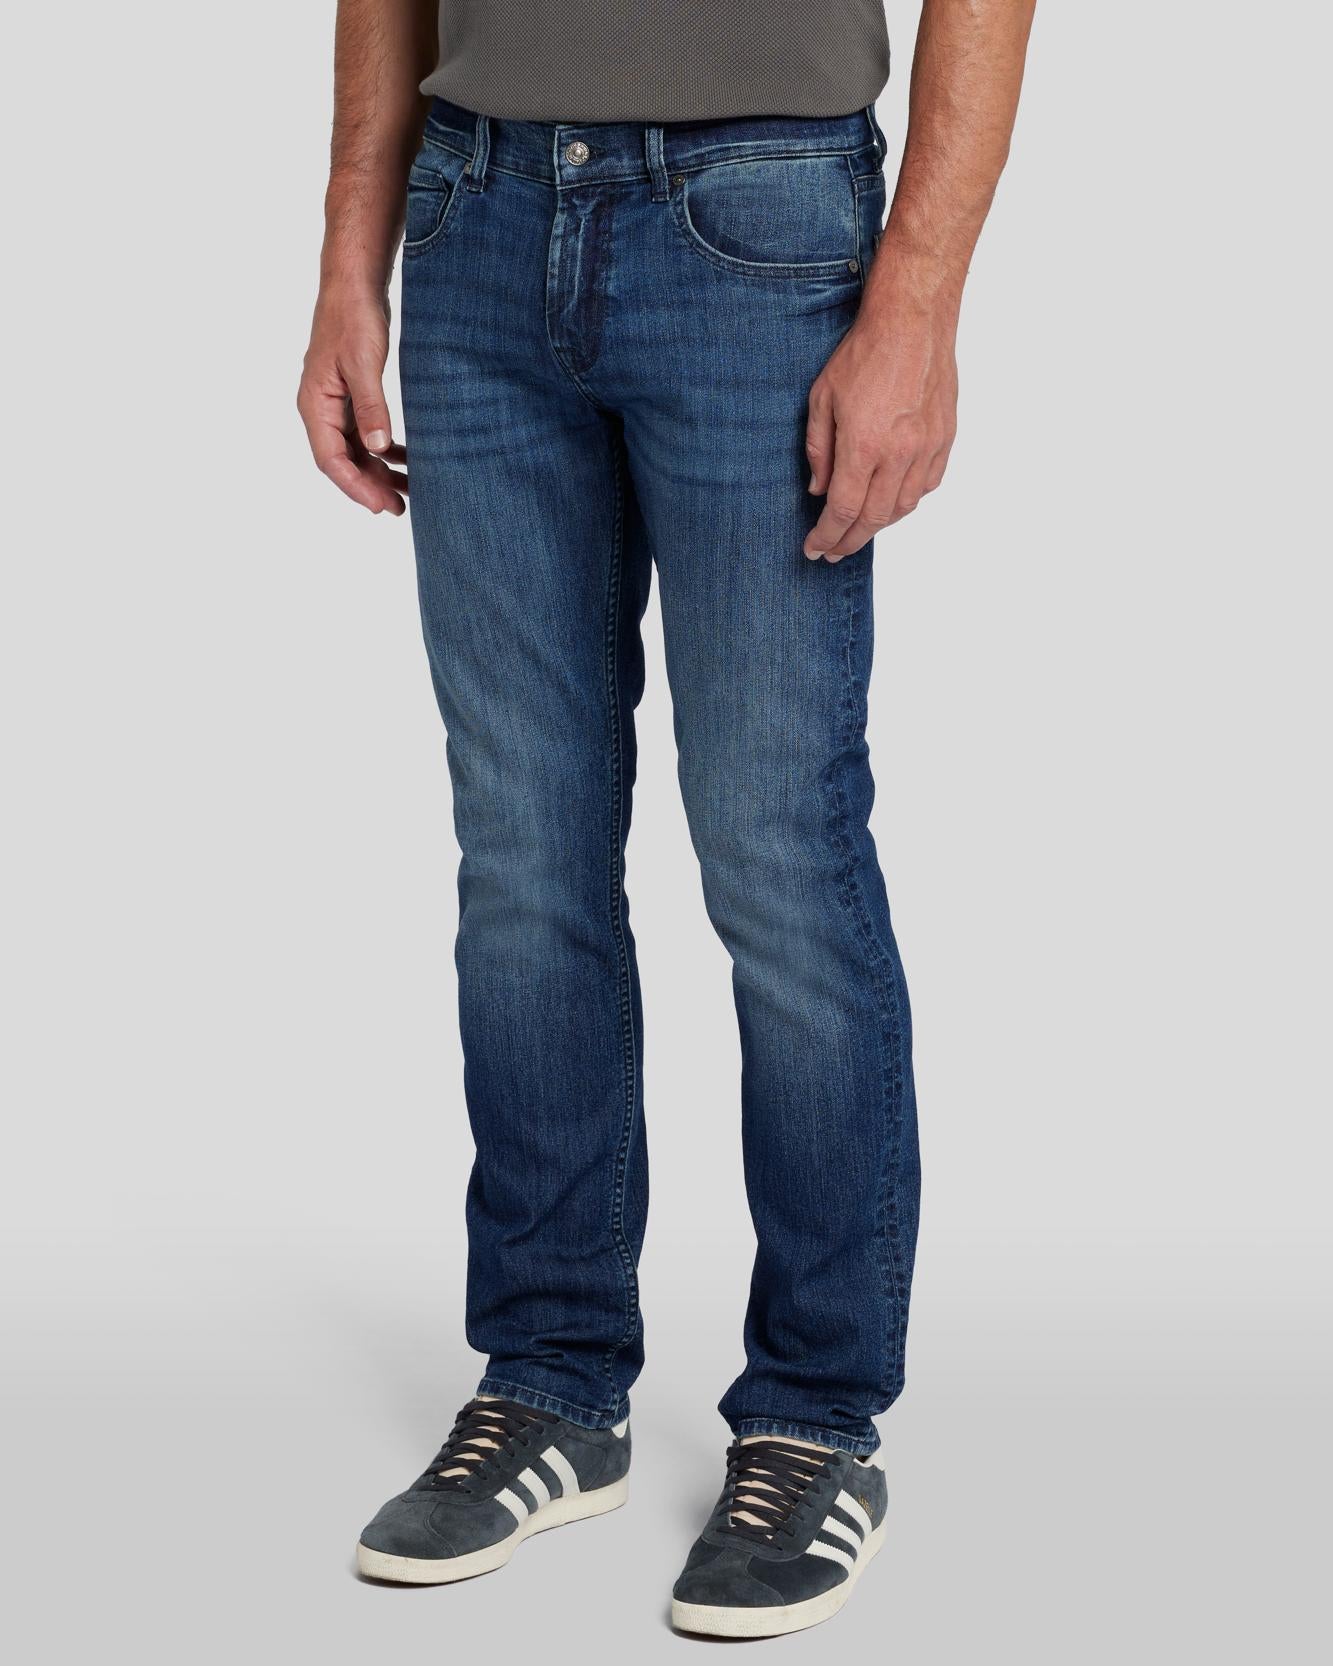 Buy Navy Blue Straight Fit Denim Jeans Online | Tistabene - Tistabene